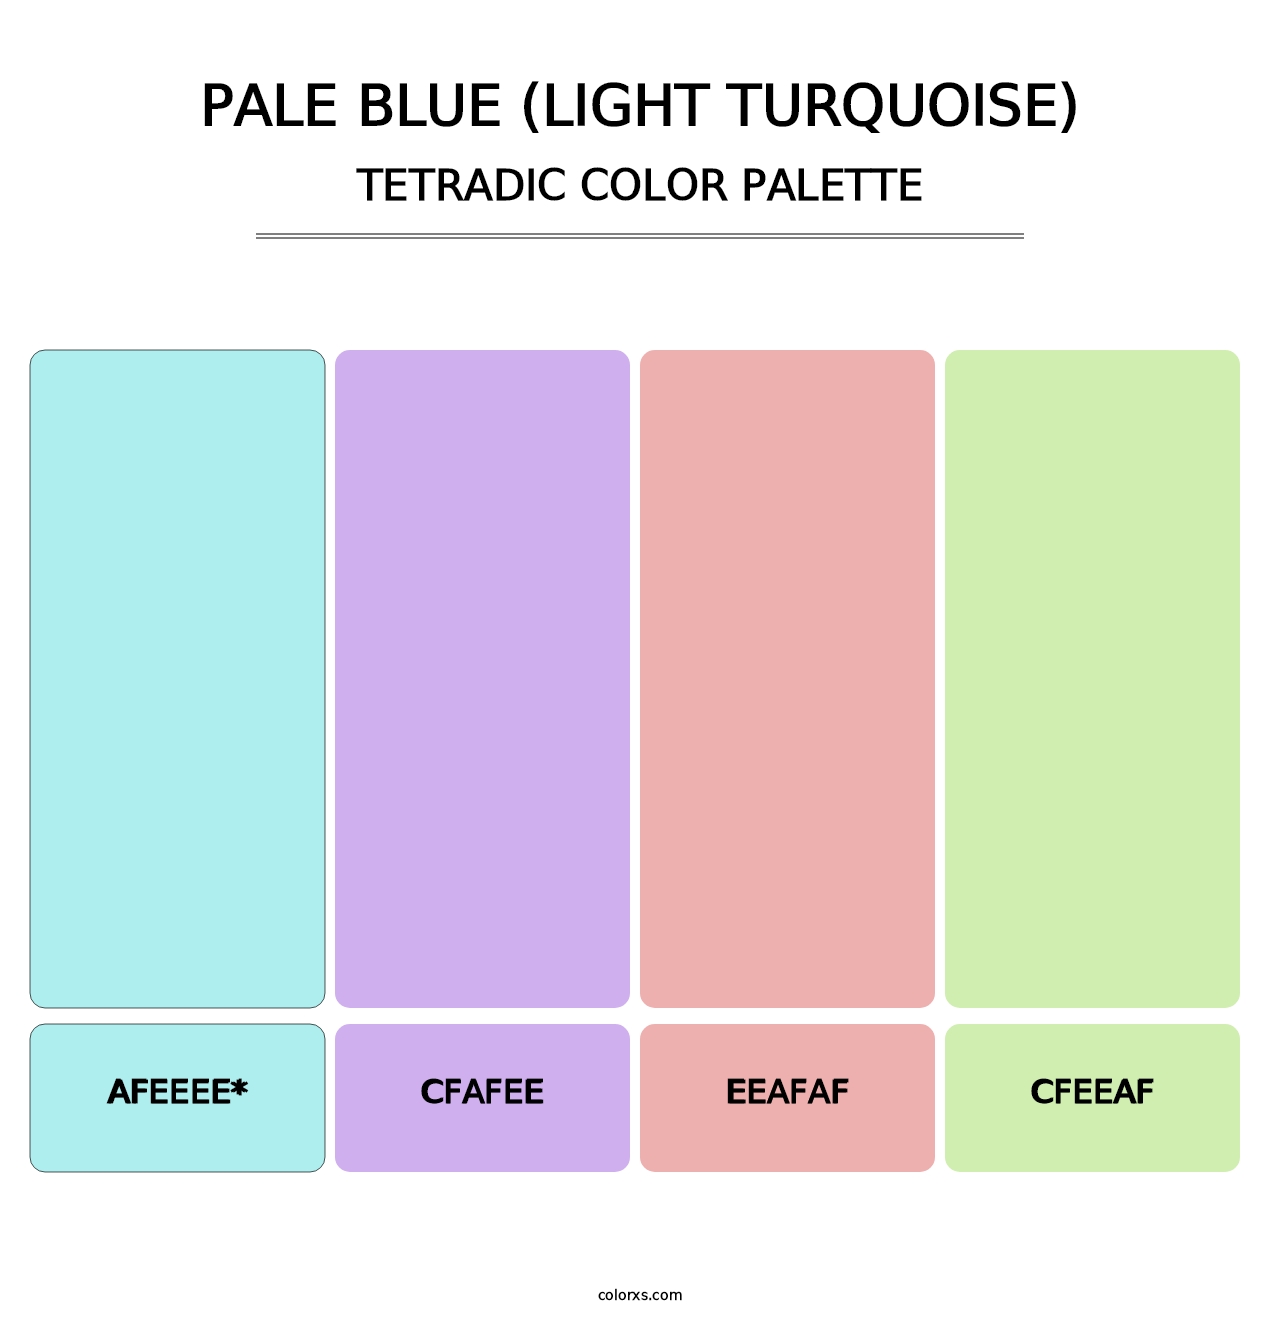 Pale Blue (Light Turquoise) - Tetradic Color Palette